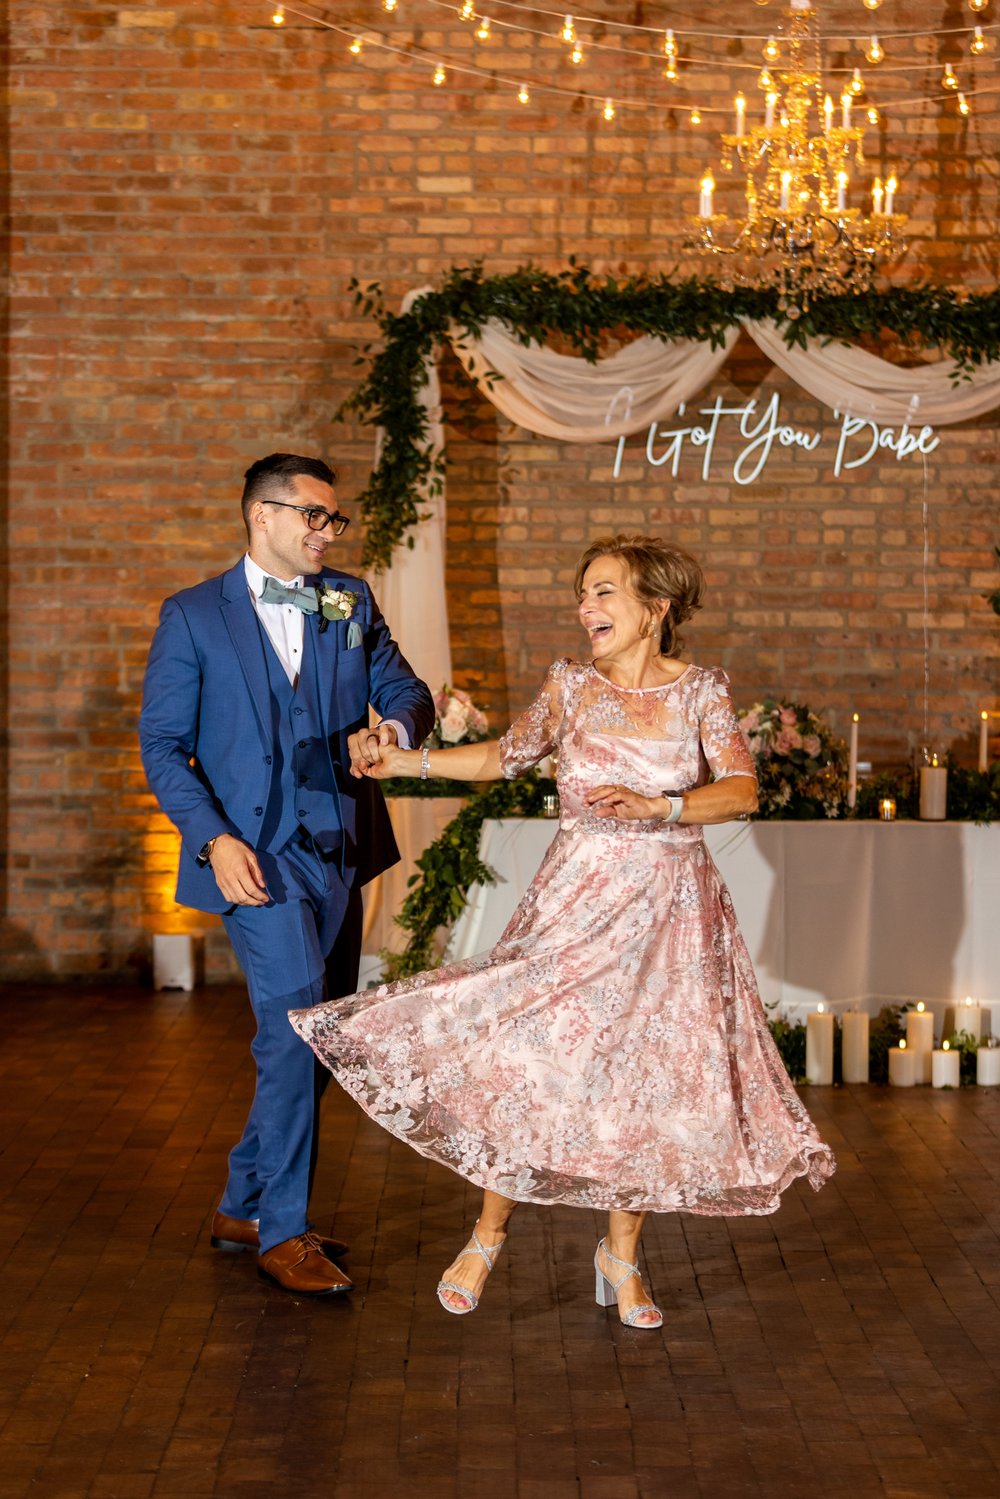 Alex Maldonado Photography | Chicago Wedding Photographer | parent dances at rockwell on the river reception space.jpg